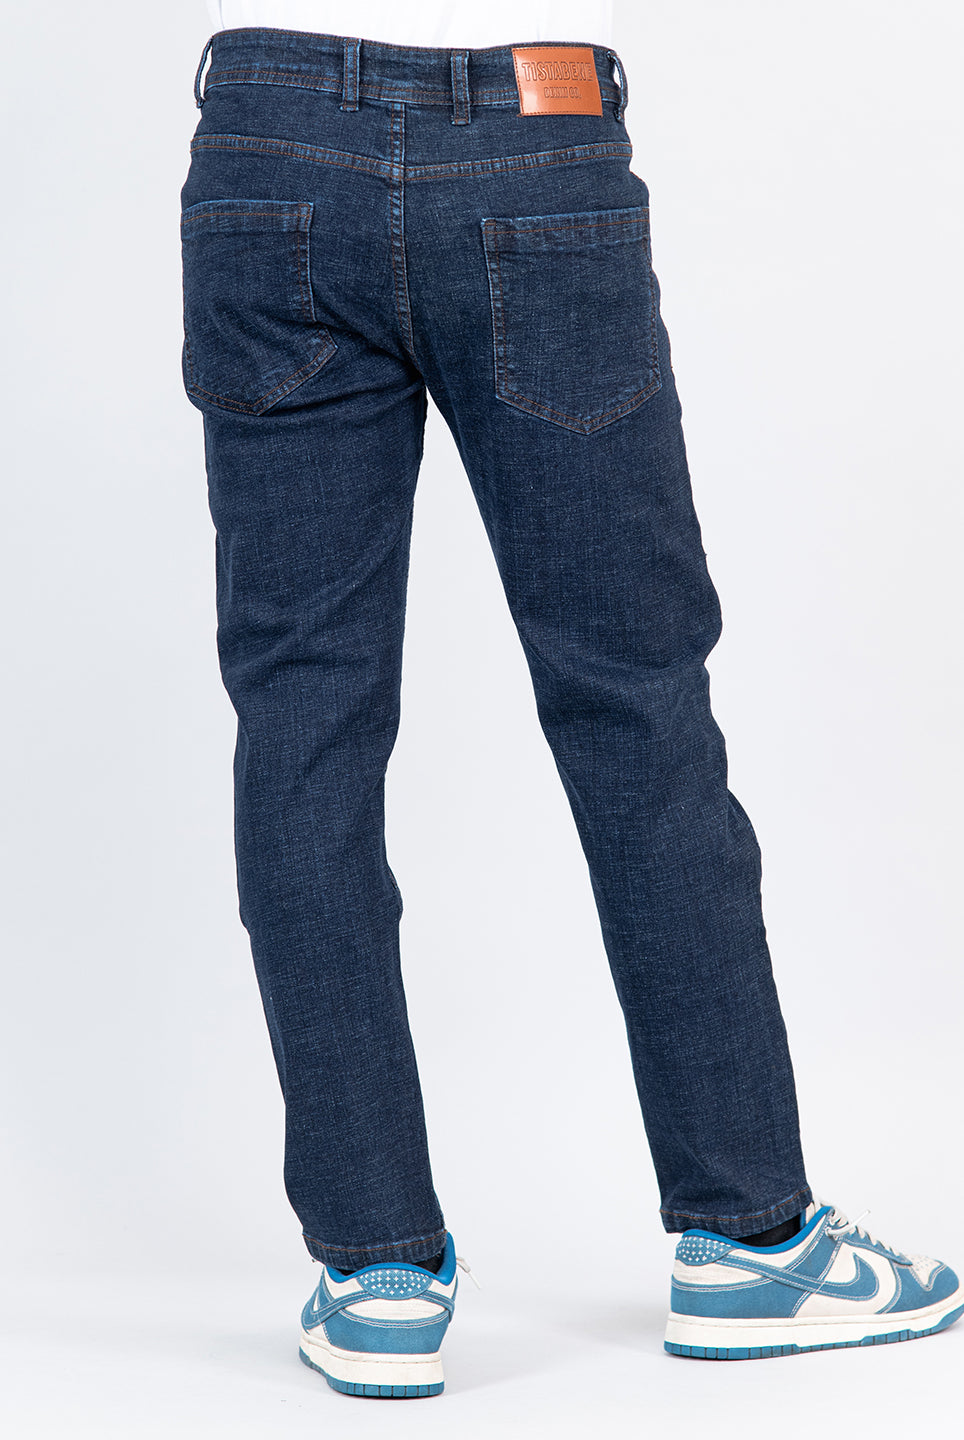 blue denim jeans 